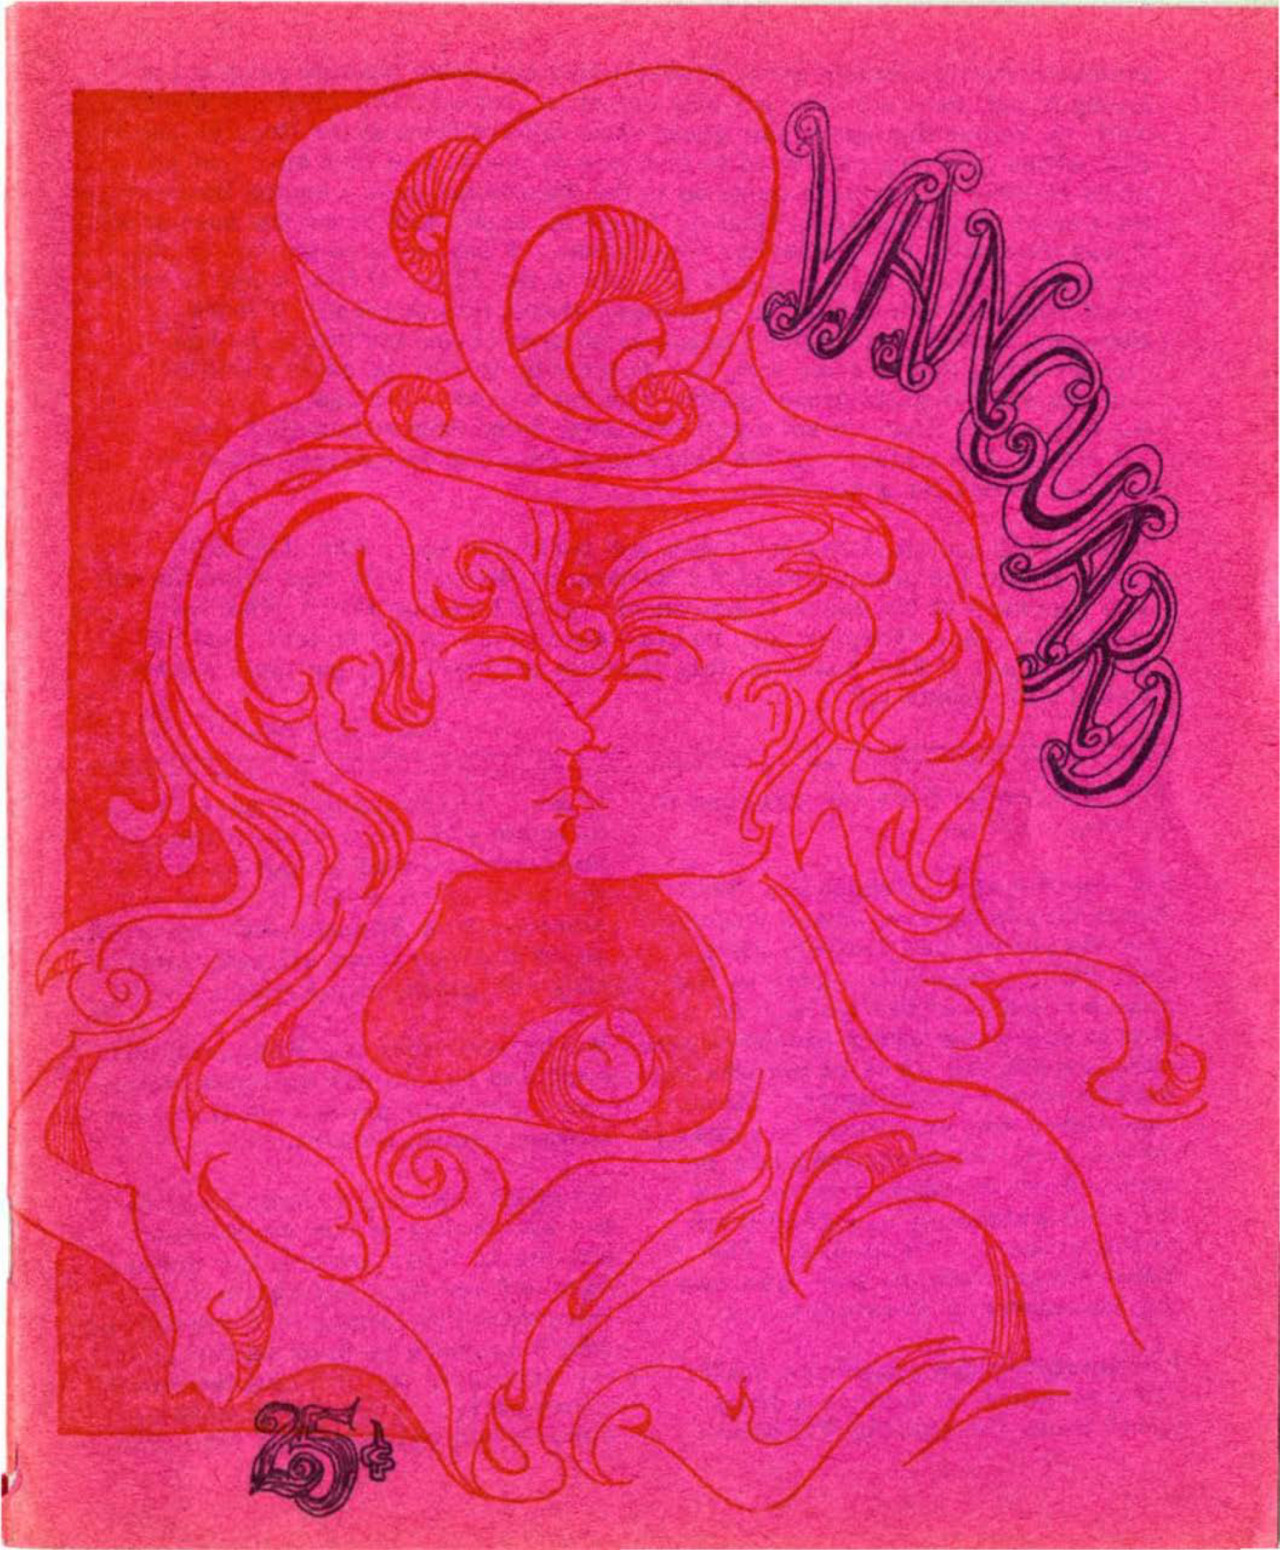 Cover of Vanguard Magazine Vol. 1 No. 9 (1967) (courtesy GLBT Historical Society and Digital Transgender Archive)